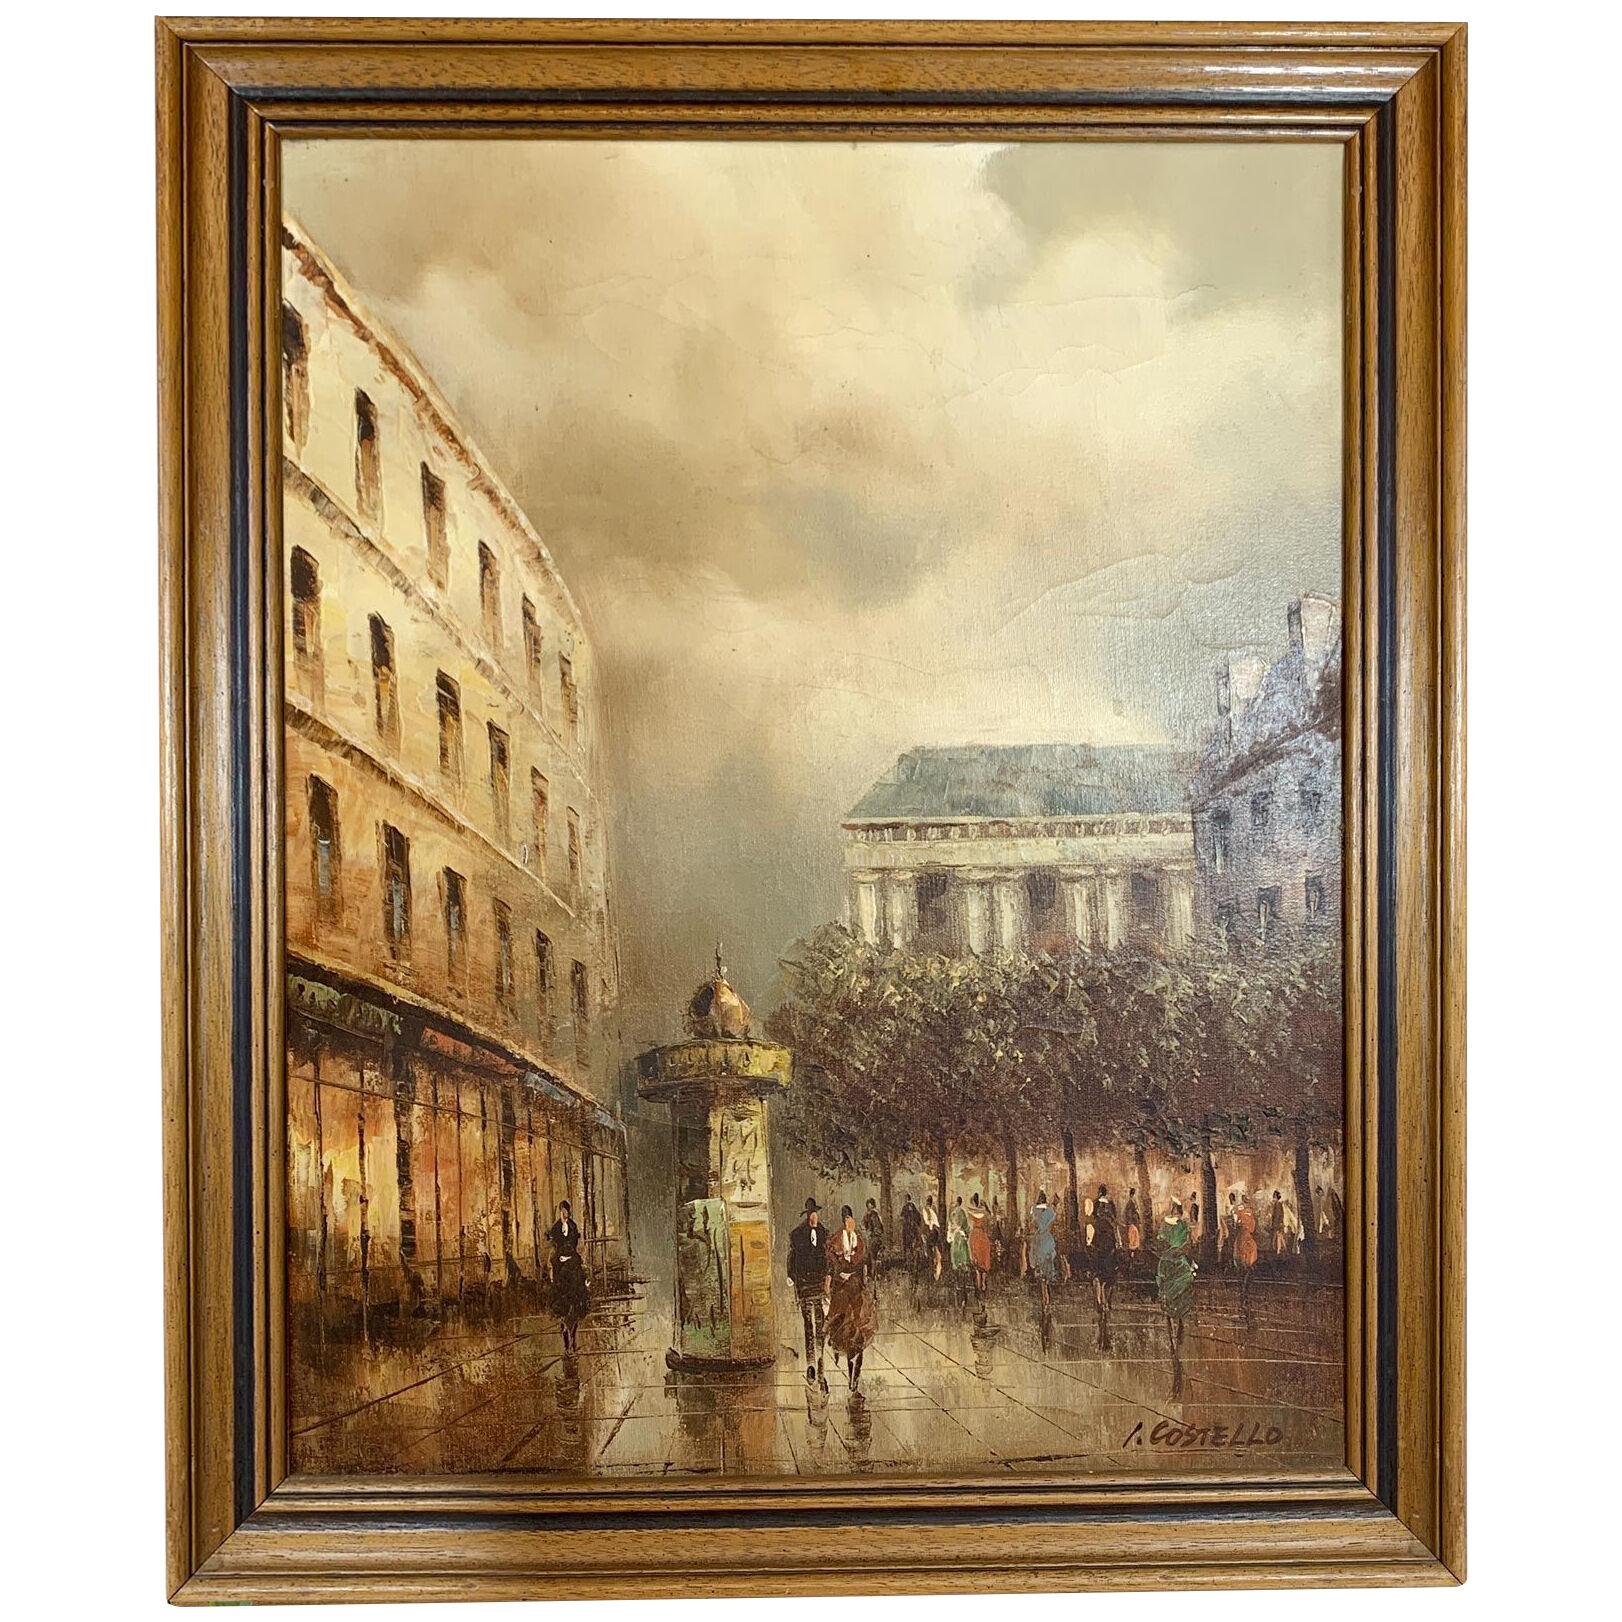 Parisian Street Scene Oil on Canvas by I Costello